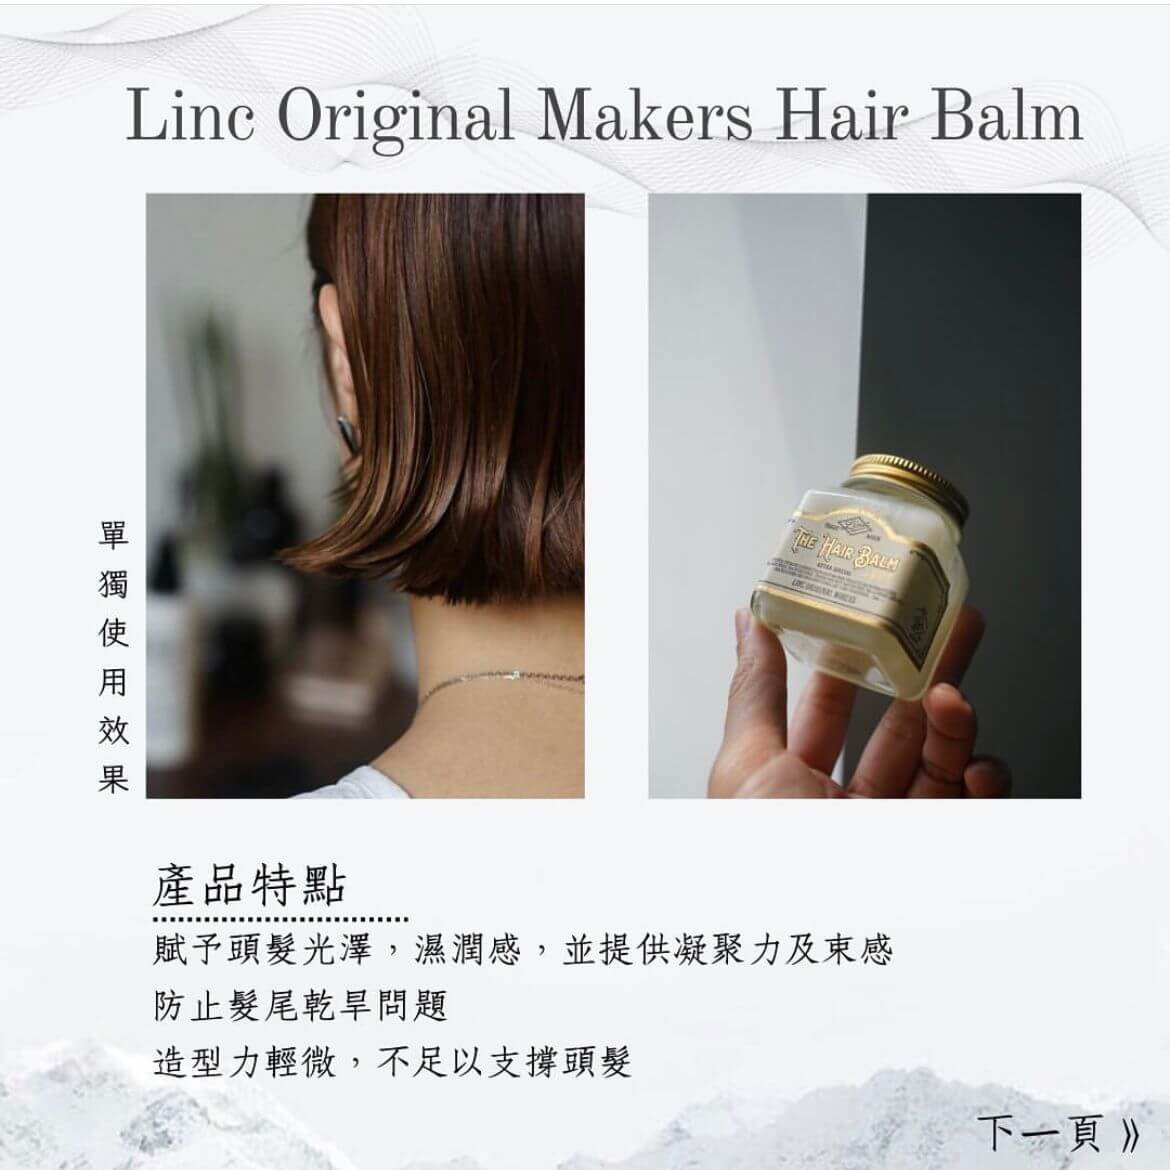 MORRIS MOTLEY x LINC ORIGINAL MAKERS hair balm 造型套裝